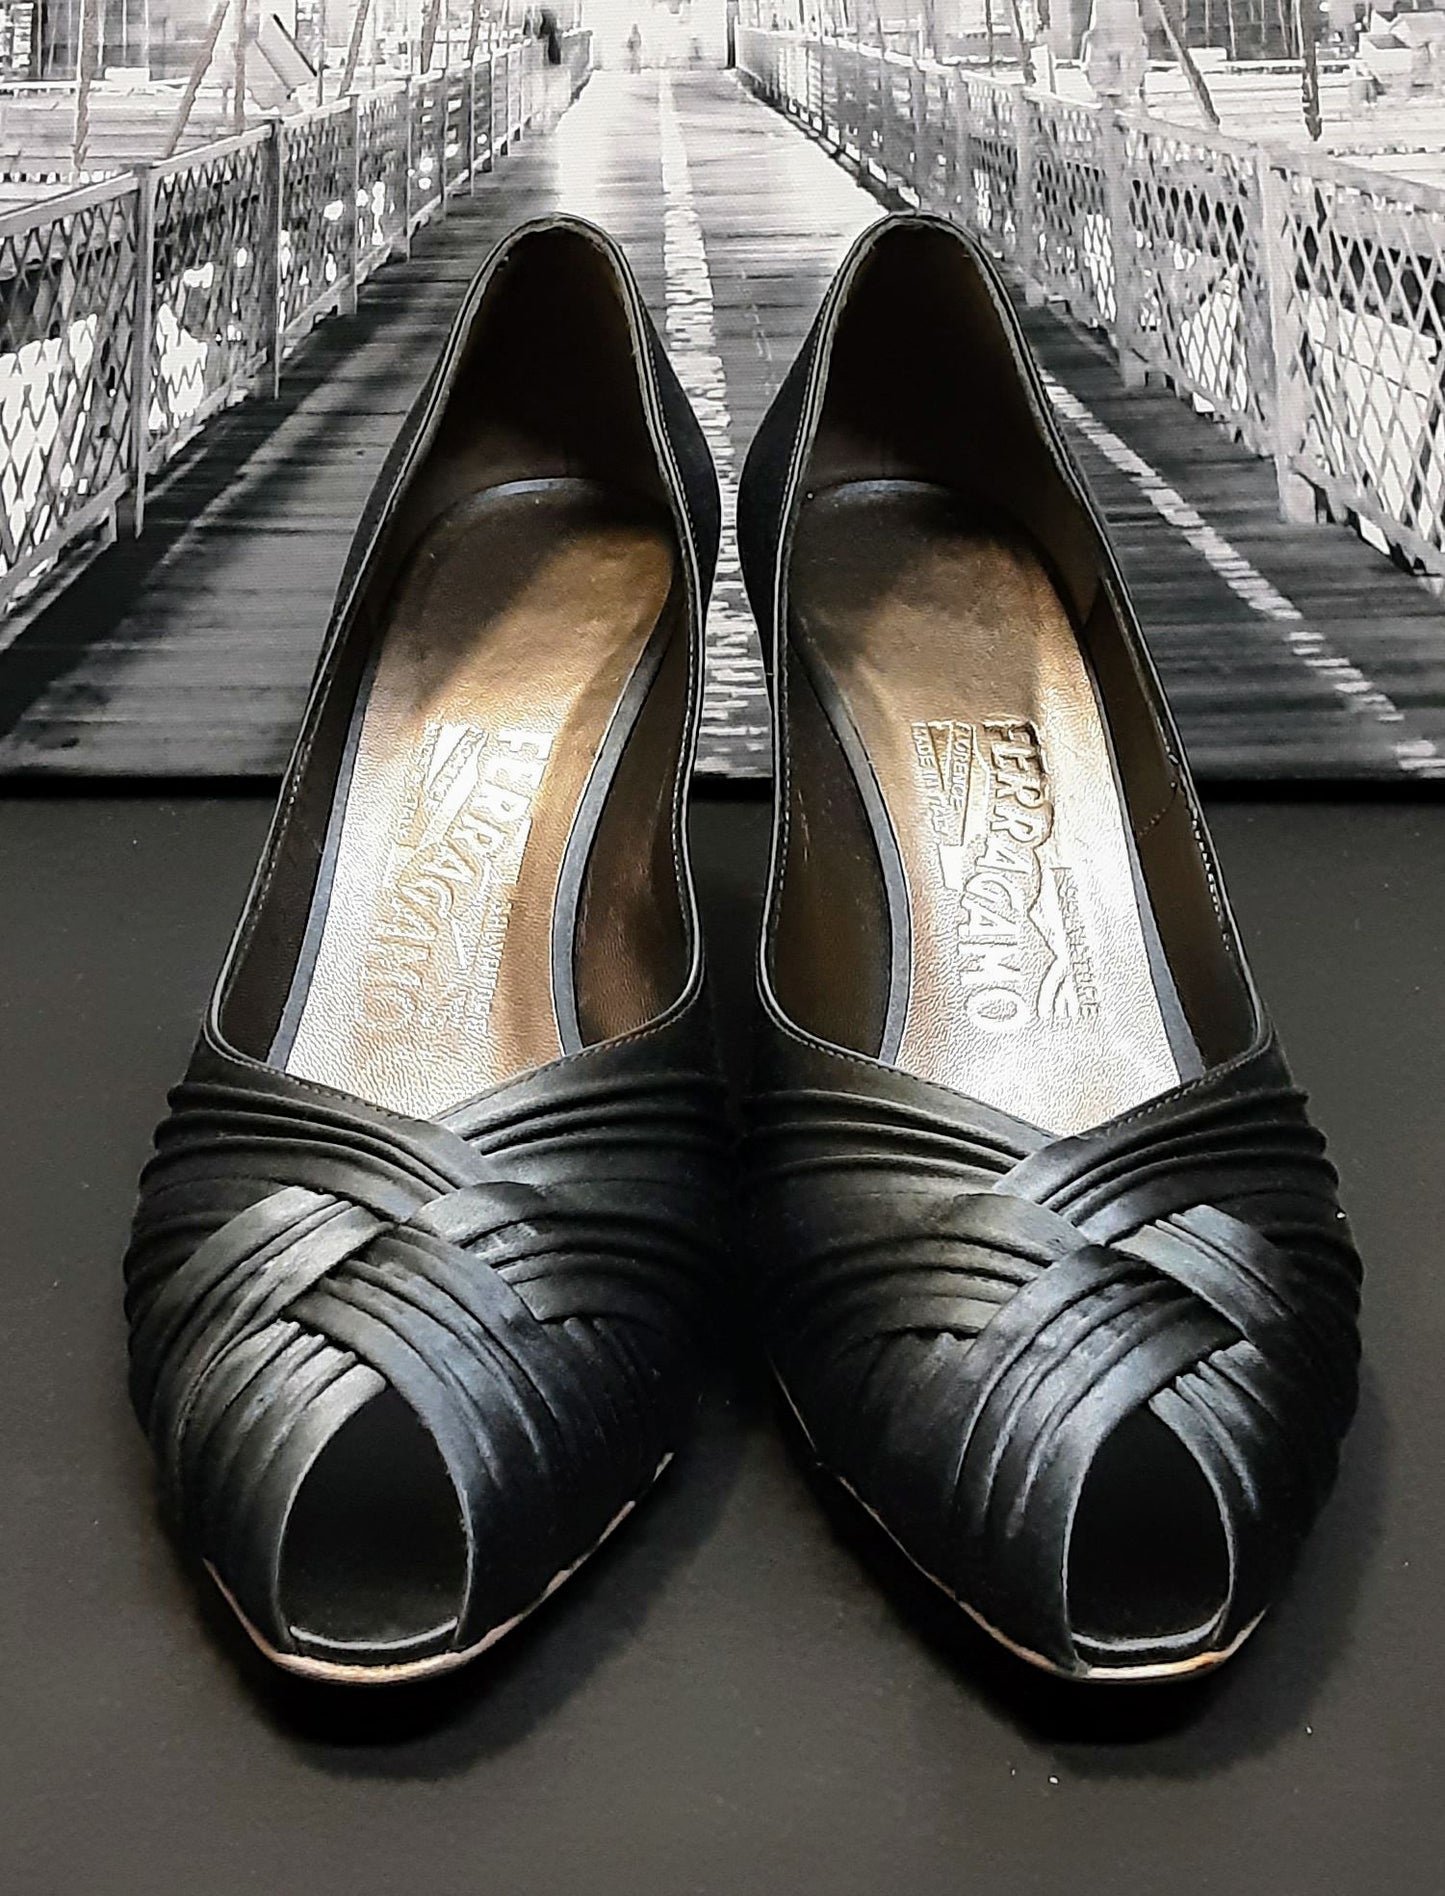 NEW Salvatore Ferragamo Smokey Grey Satin Heel Shoes size 4